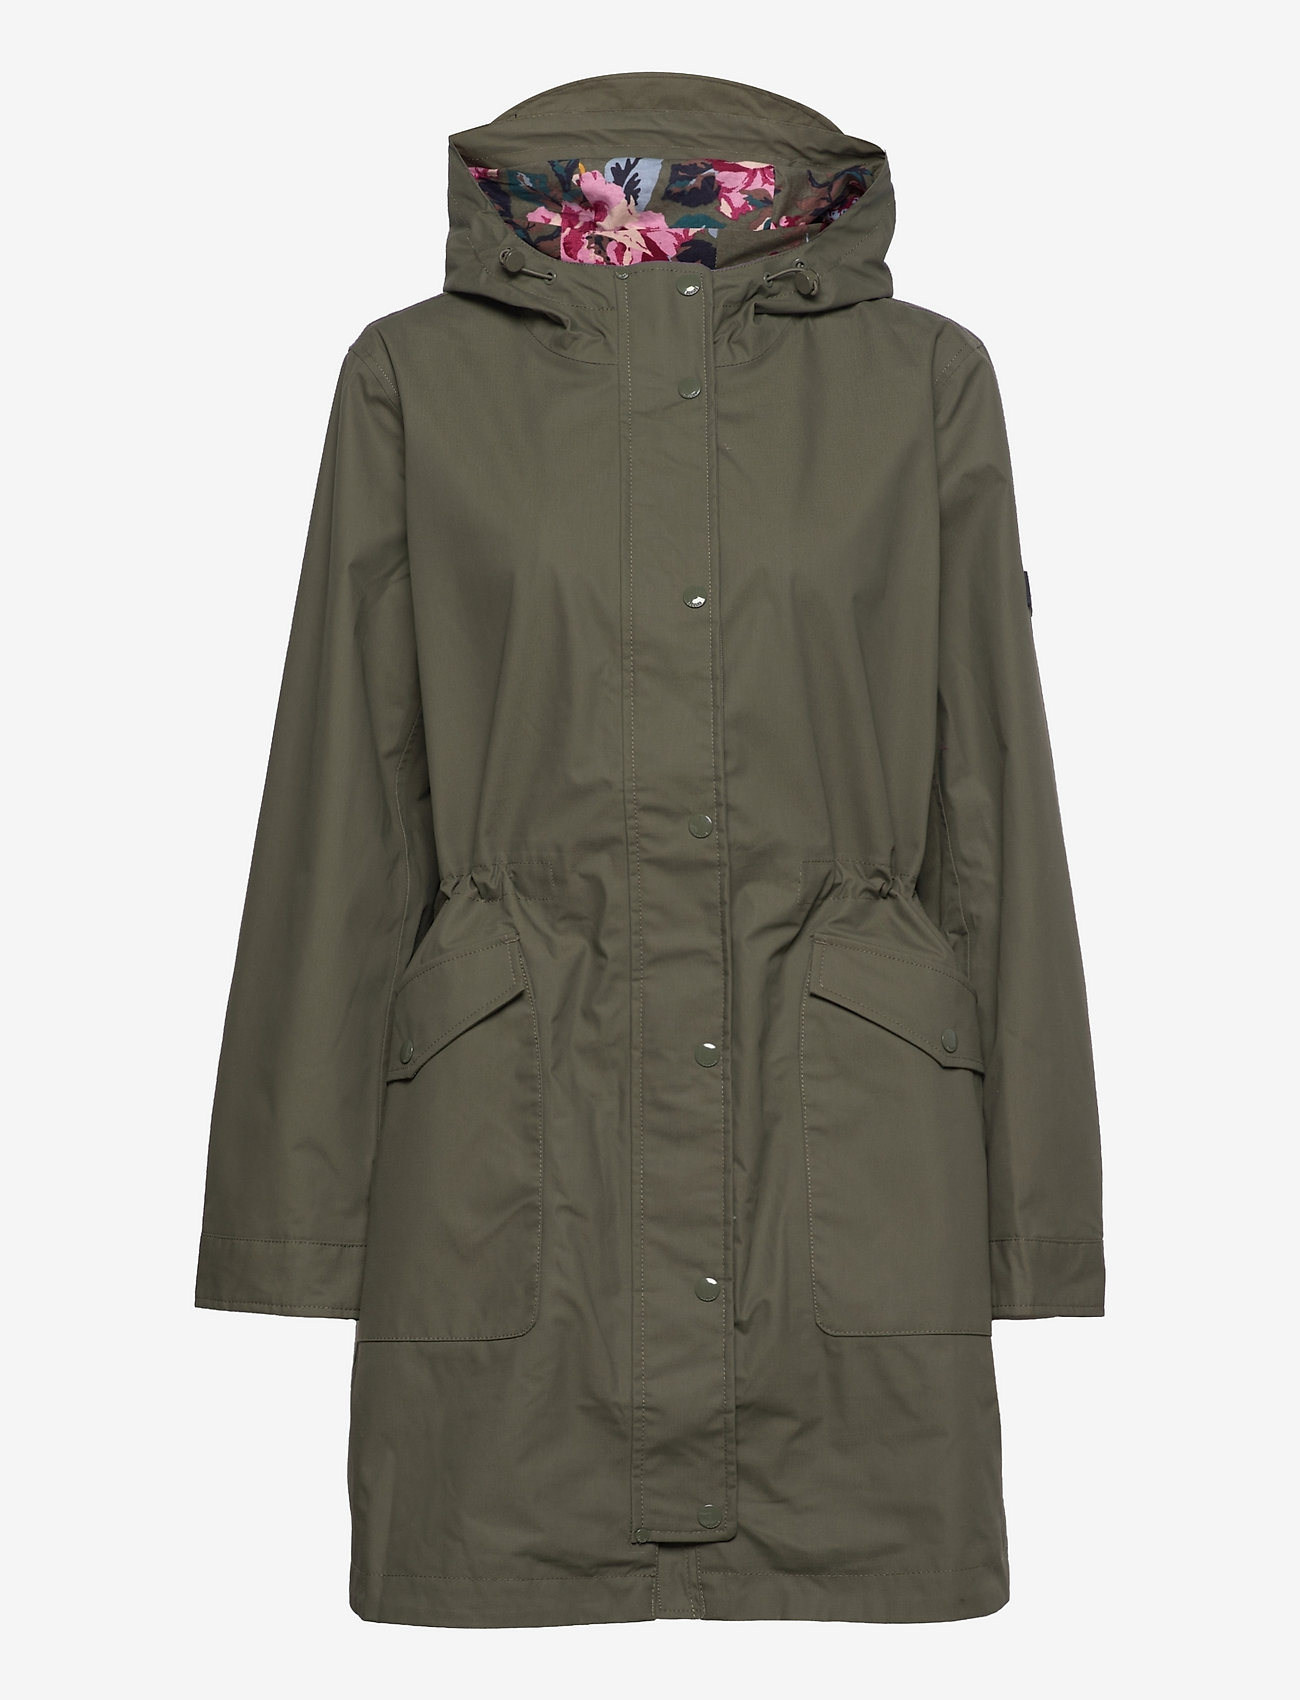 Joules Women's Loxley Raincoat